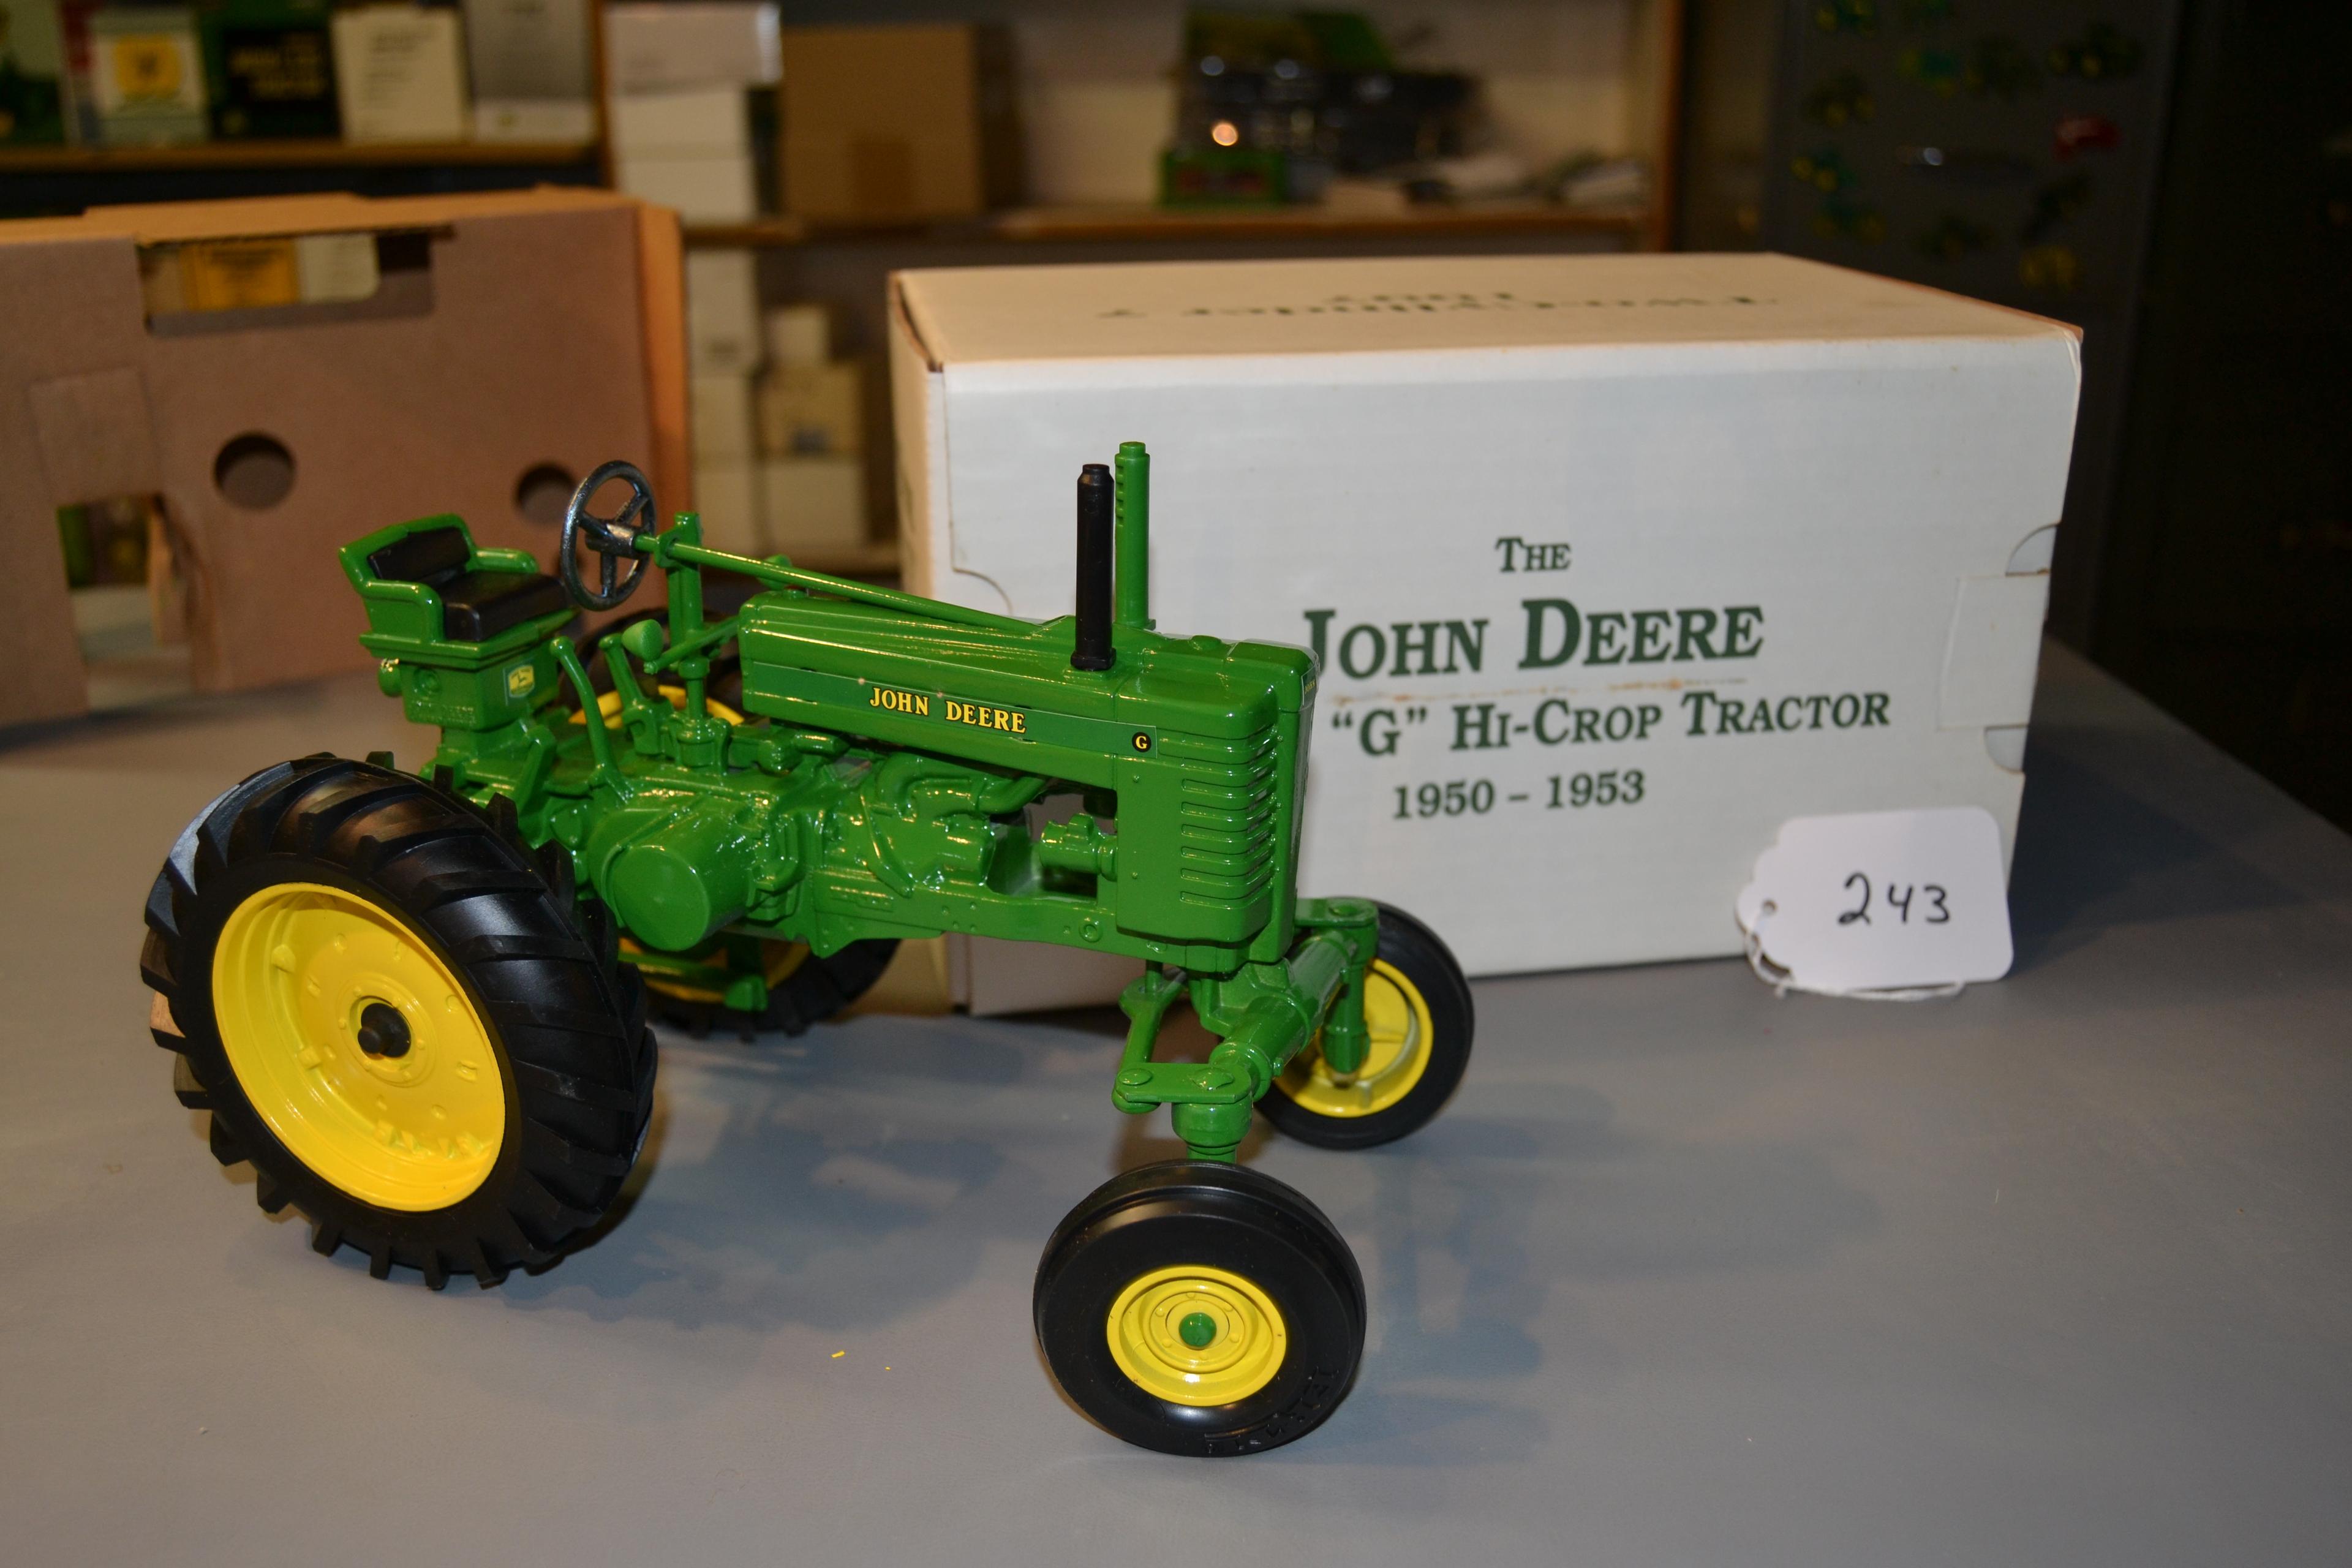 2 cylinder 7 expo 1997 - diecast JD 1950-53 "G" hi-crop tractor W/box